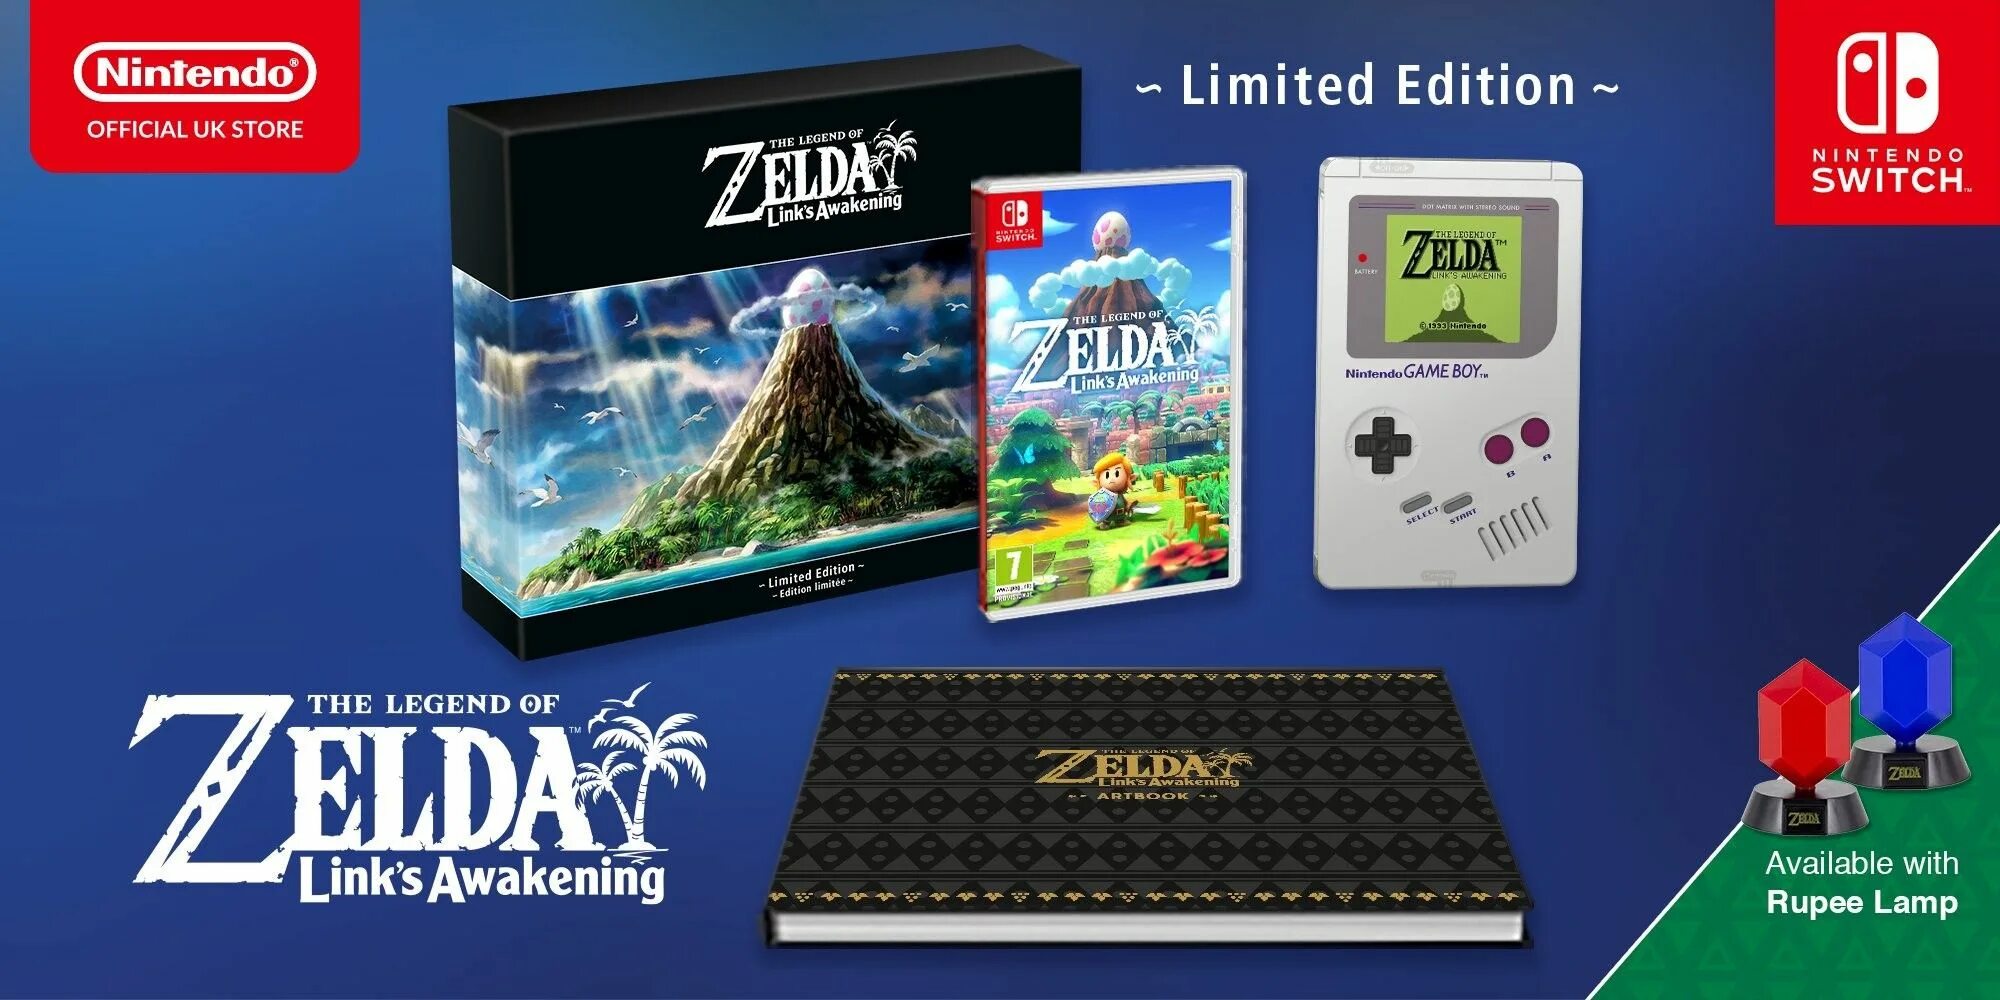 Nintendo Switch the Legend of Zelda Limited Edition. Zelda link's Awakening Nintendo Switch коллекционное издание. The Legend of Zelda 2 коллекционное издание. Линк Зельда Нинтендо. Nintendo link